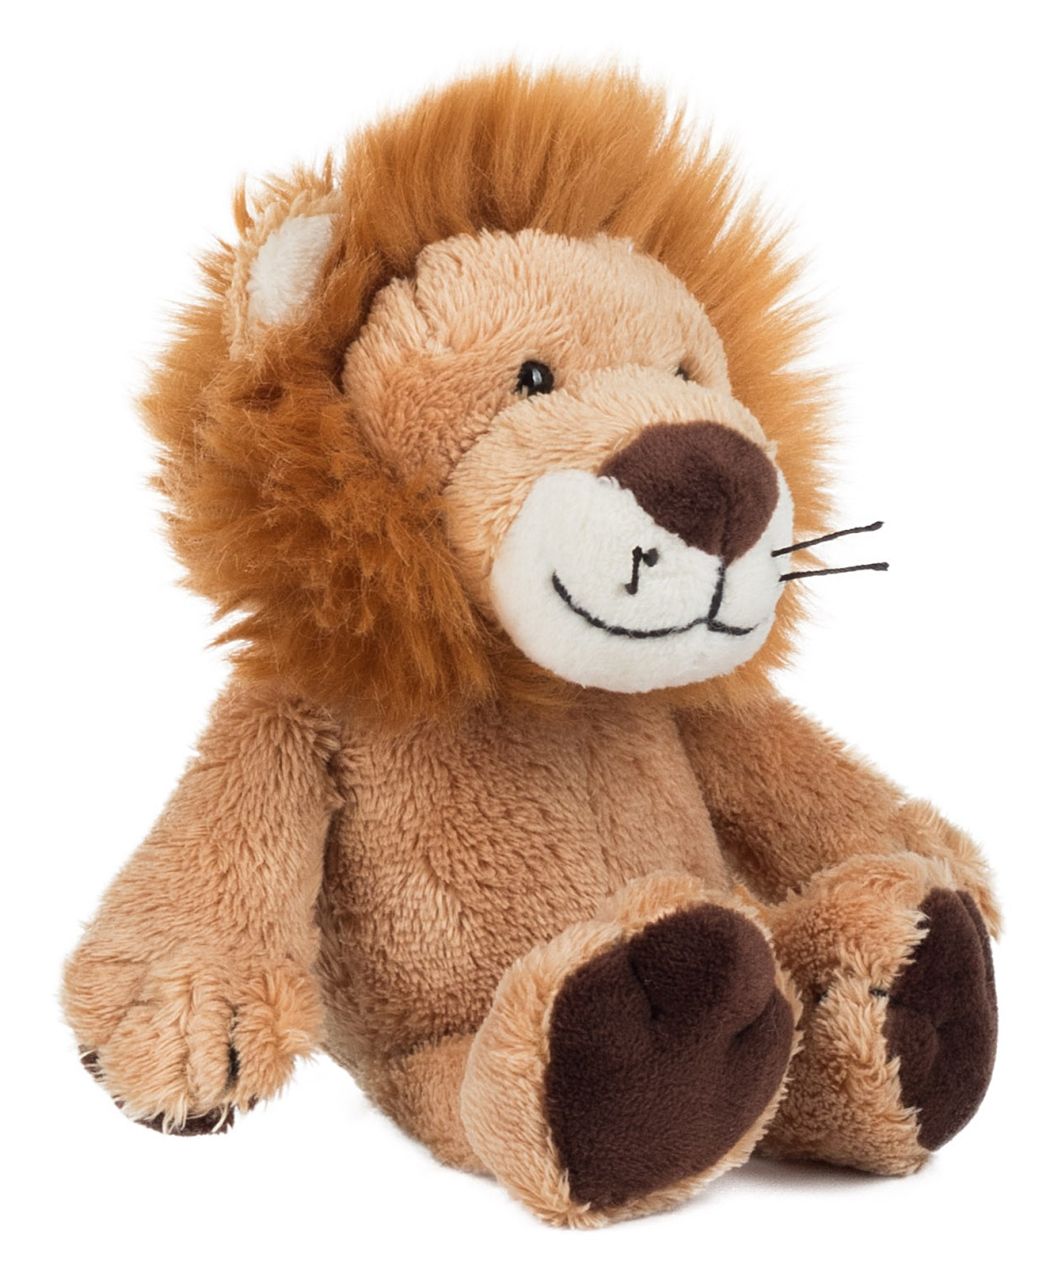 Schaffer -Plush toy lion "Kumba" 15cm